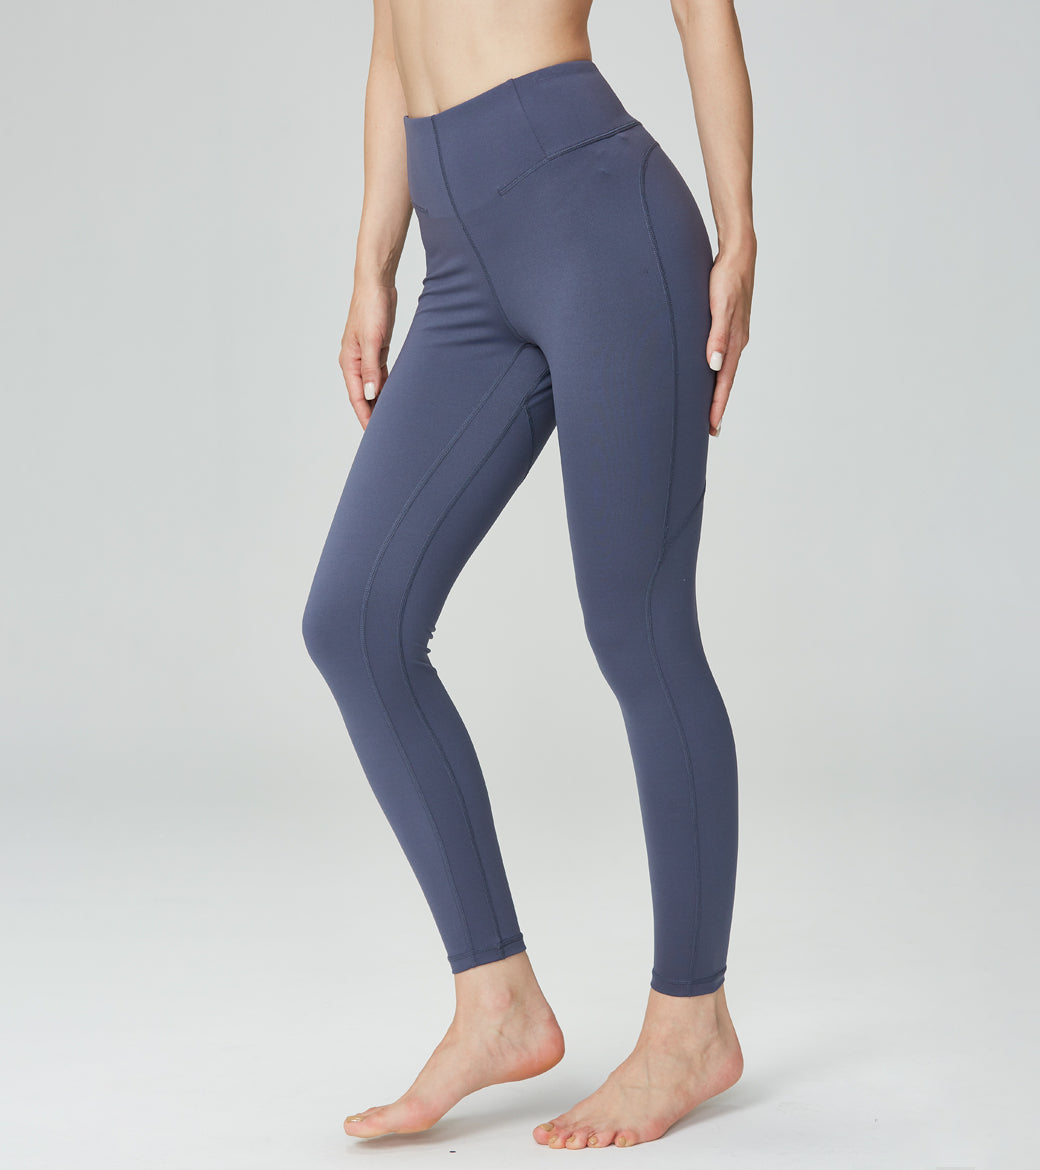 LOVESOFT Women's Dark Blue Tight-fitting High-waist Hip-lifting Leggings